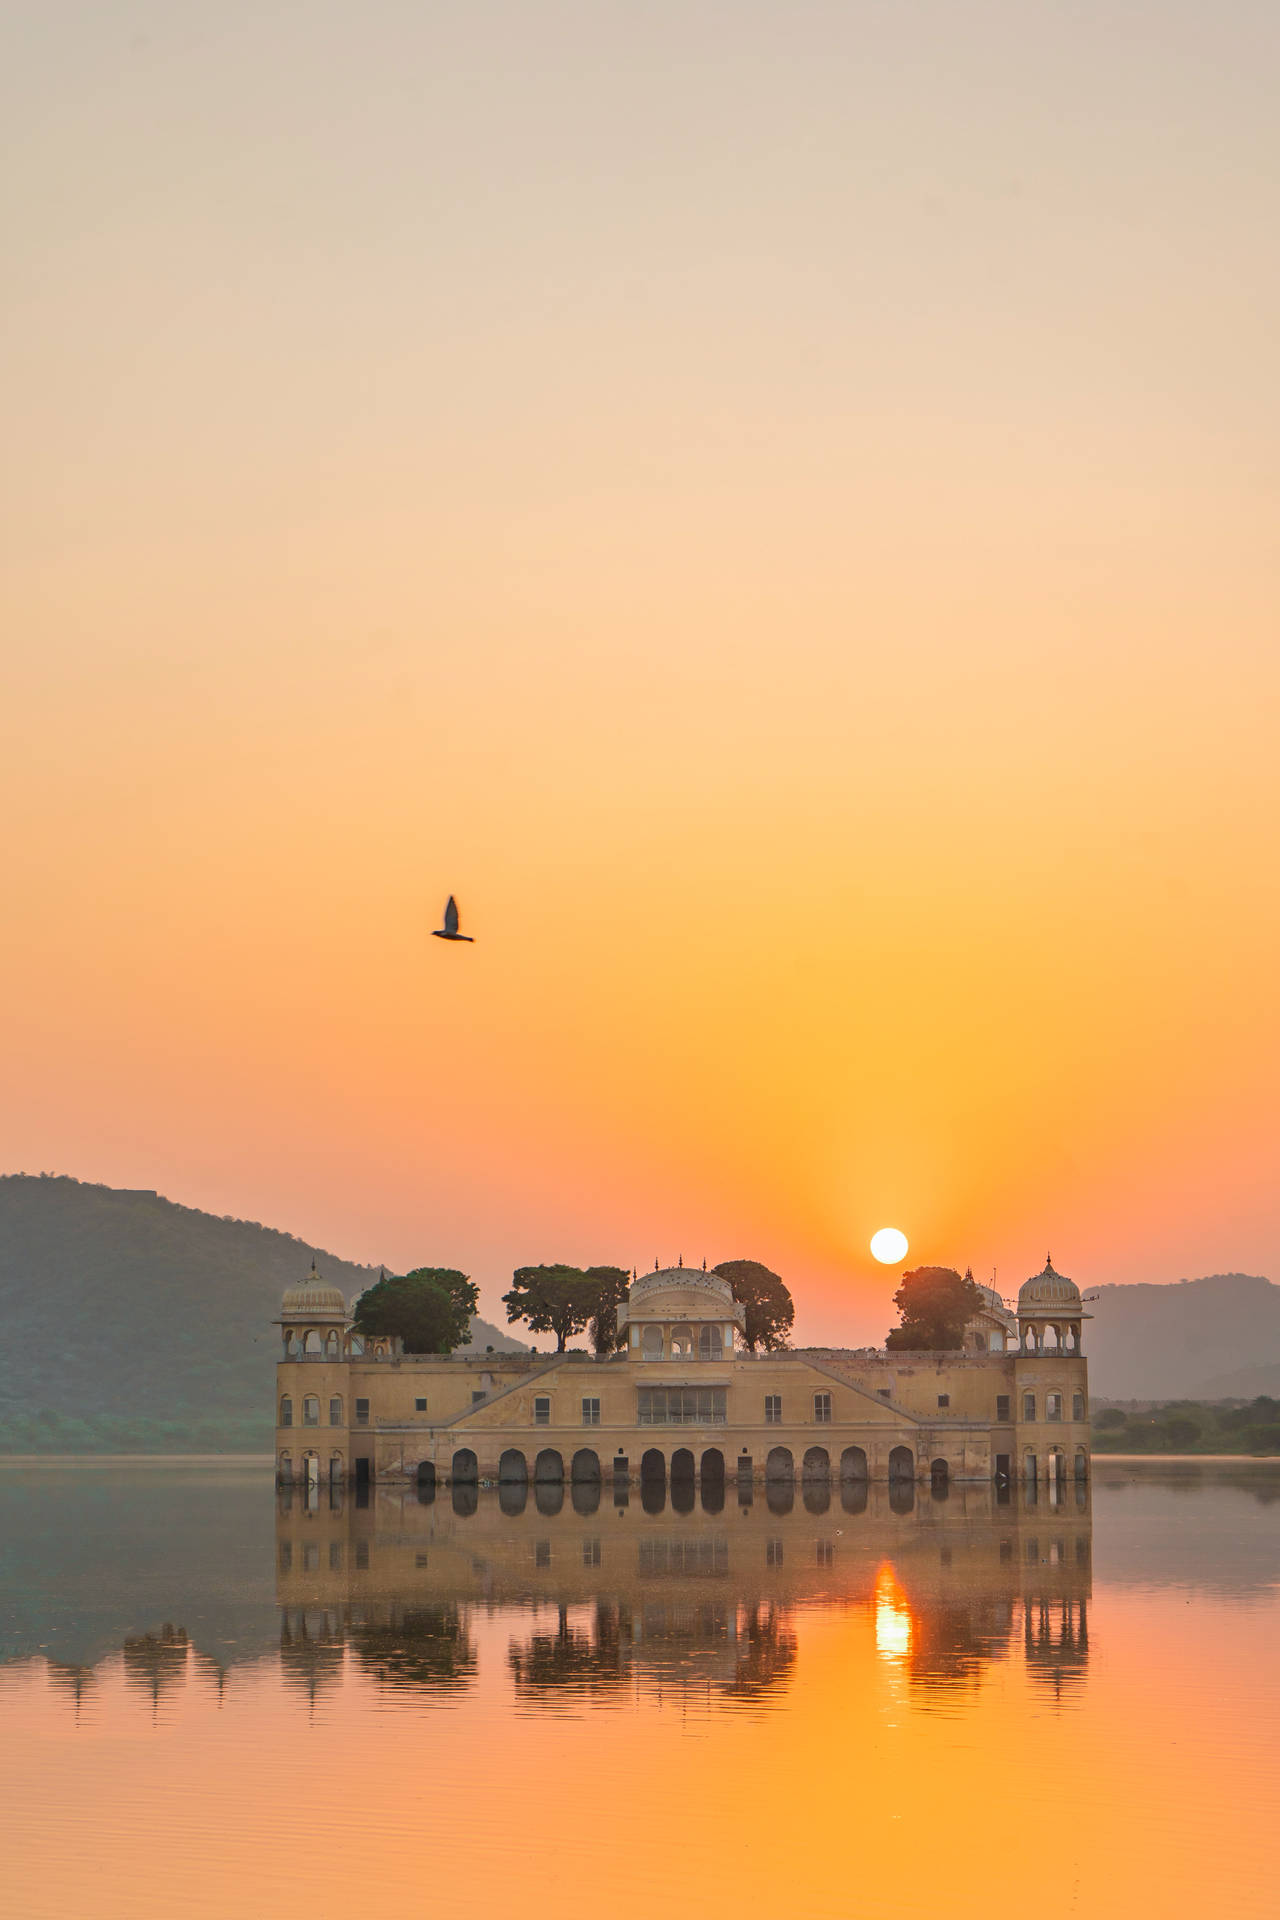 Jal Mahal In Jaipur During Sunset Wallpaper